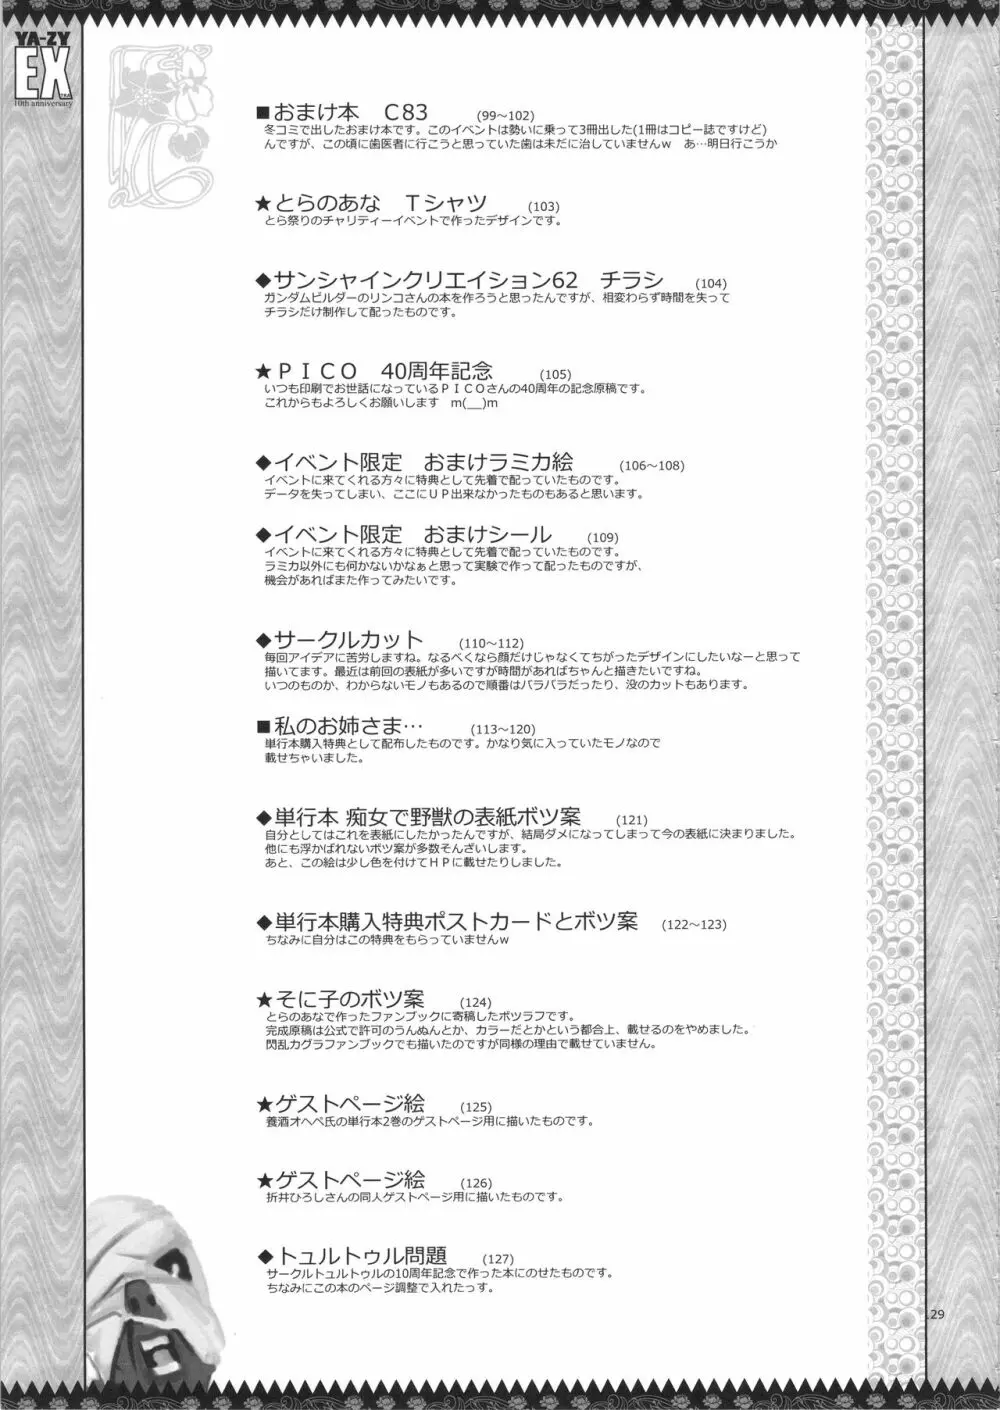 YA-ZY EX 10th anniversary - page128